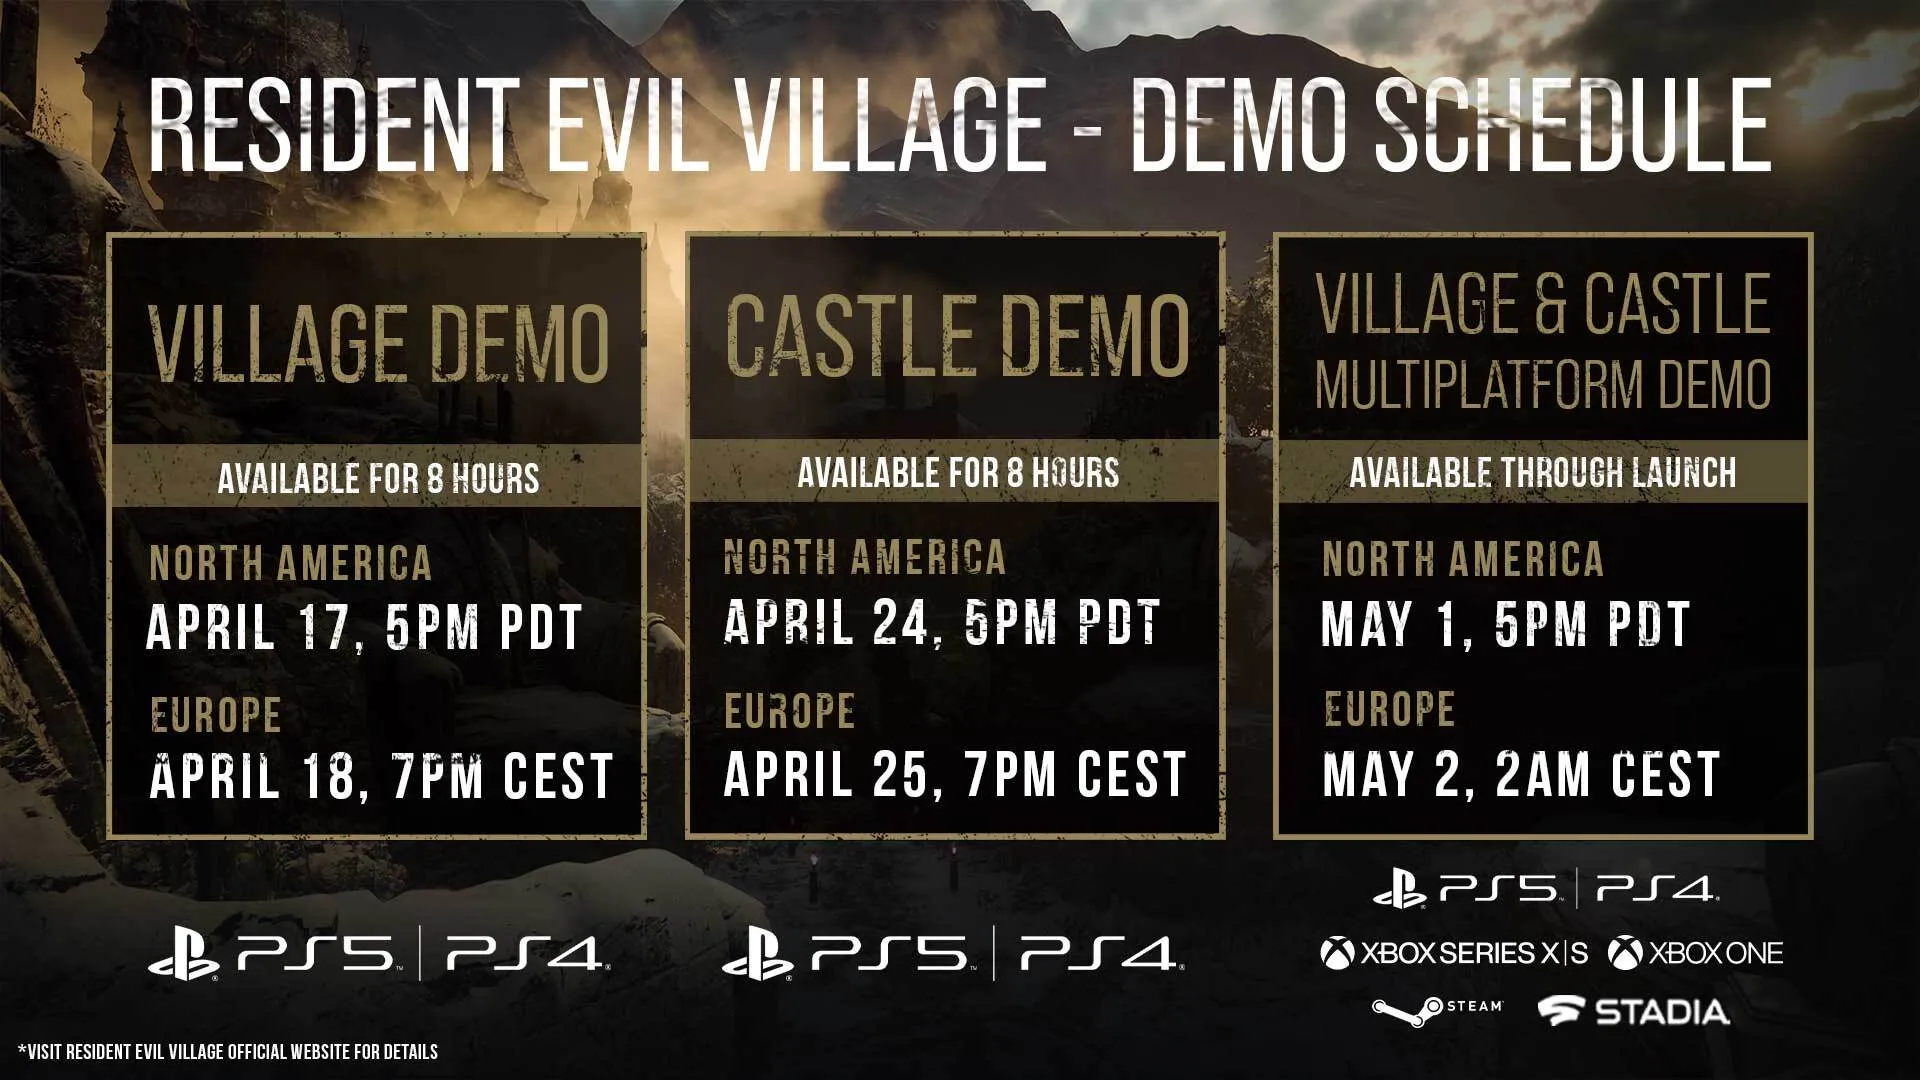 Resident Evil Village Demo times